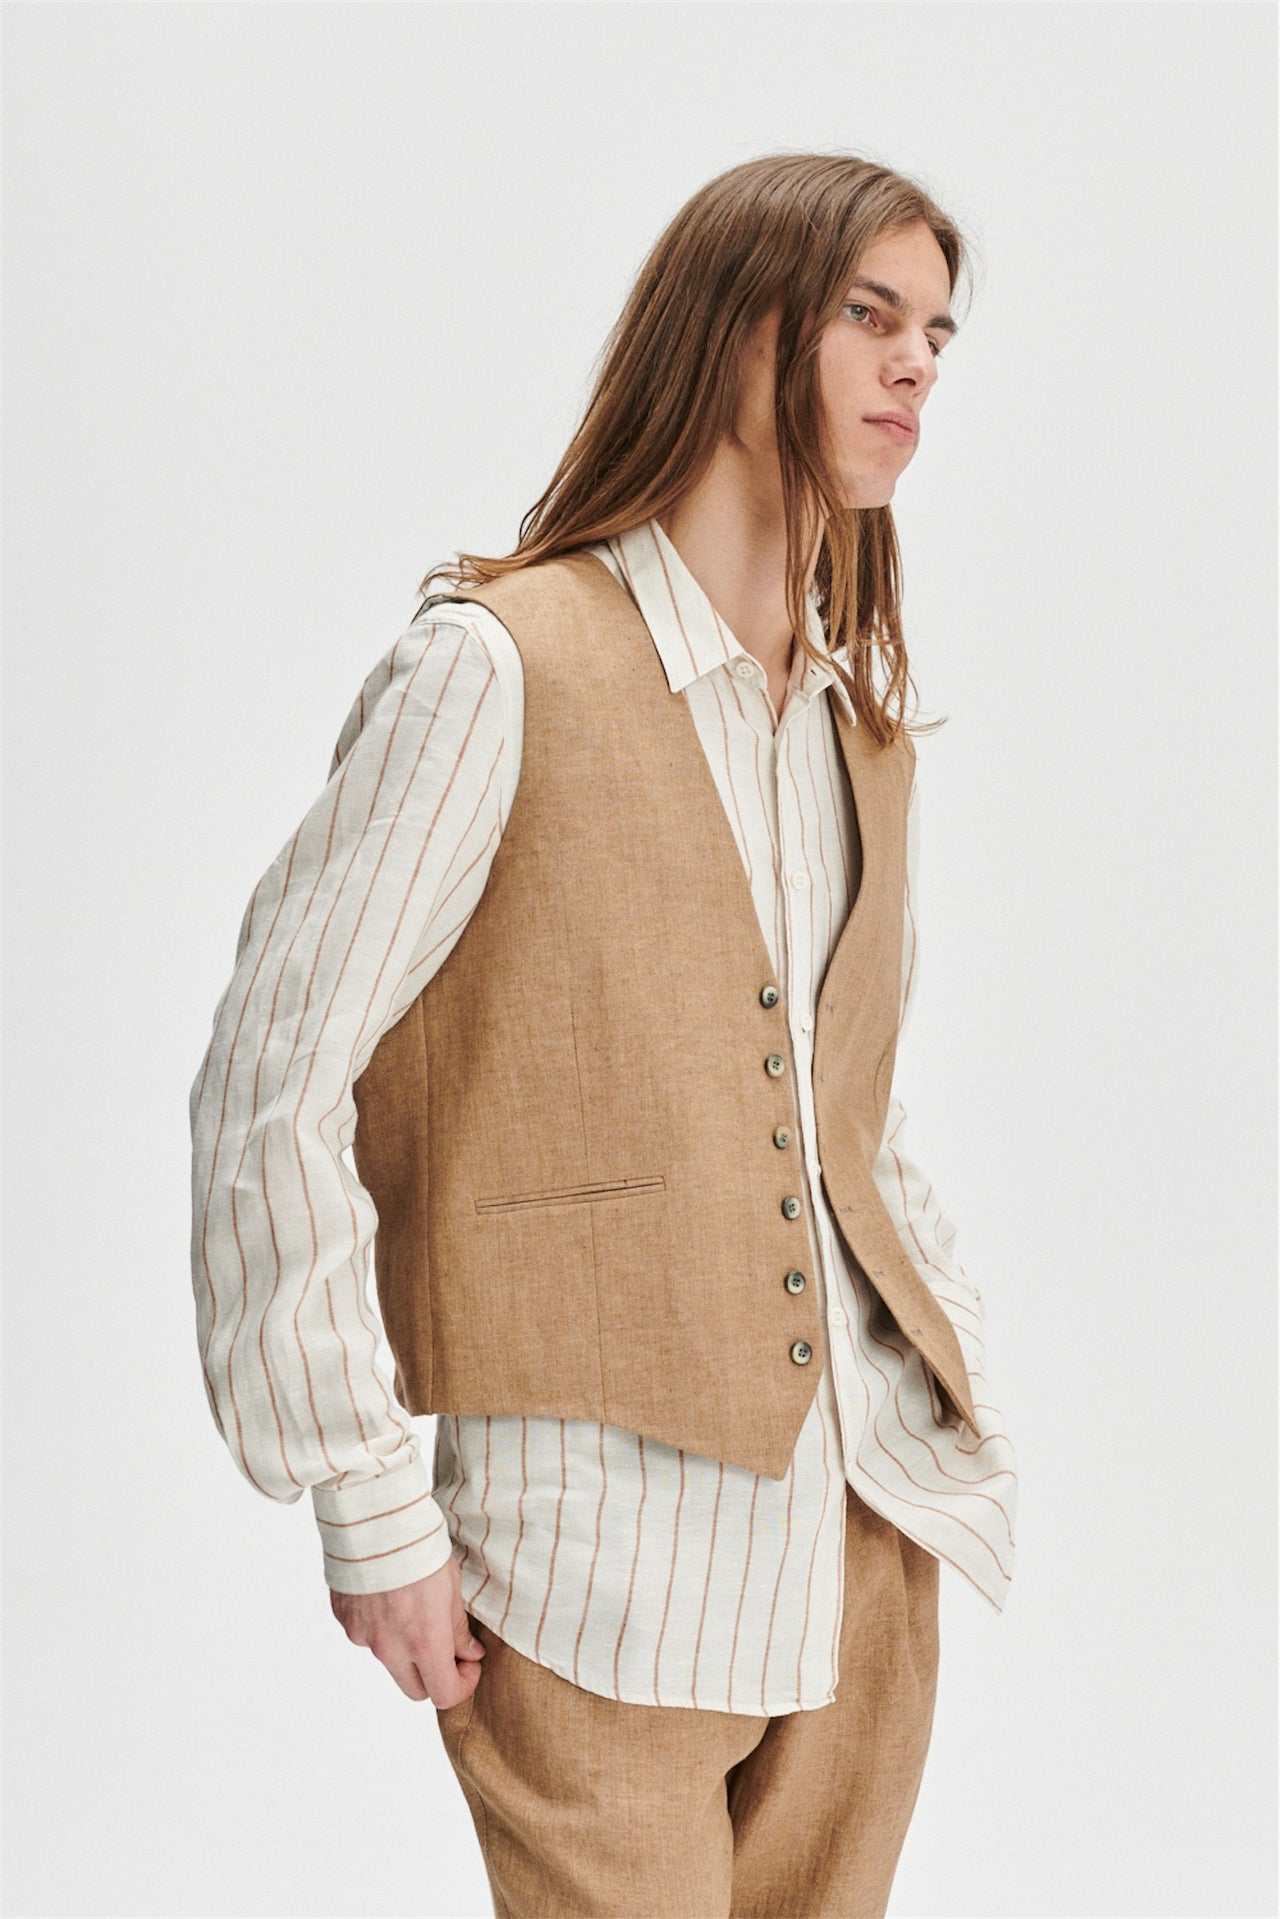 Vest in a Light Brown 100% Traceable Italian Linen by Albini